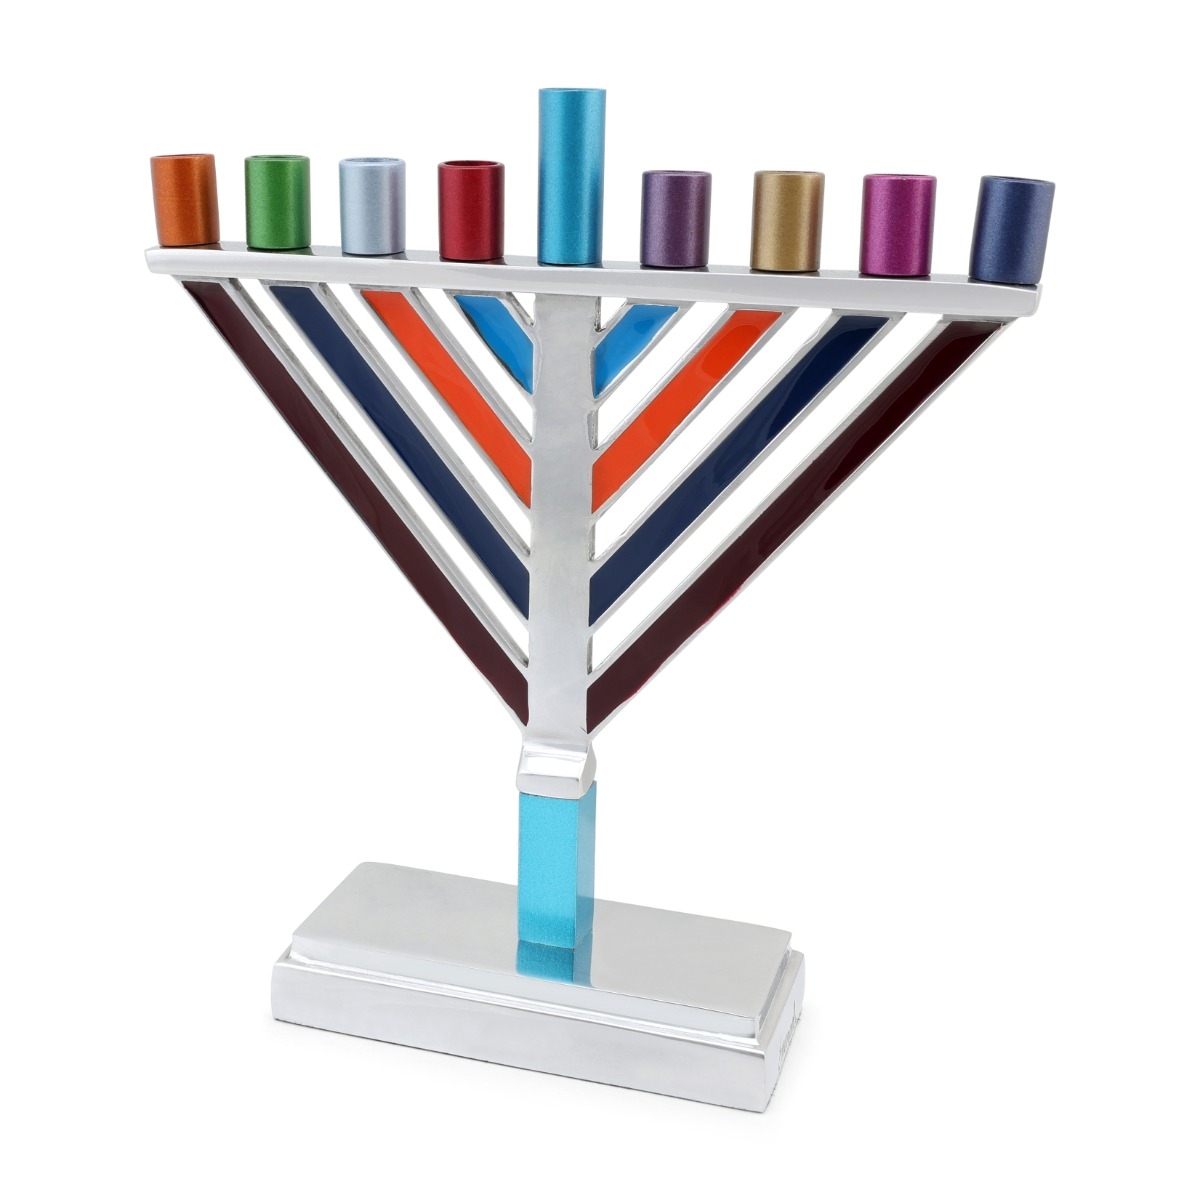 Yair Emanuel Enamel Painted Chabad Hanukkah Menorah - Multicolored - 1